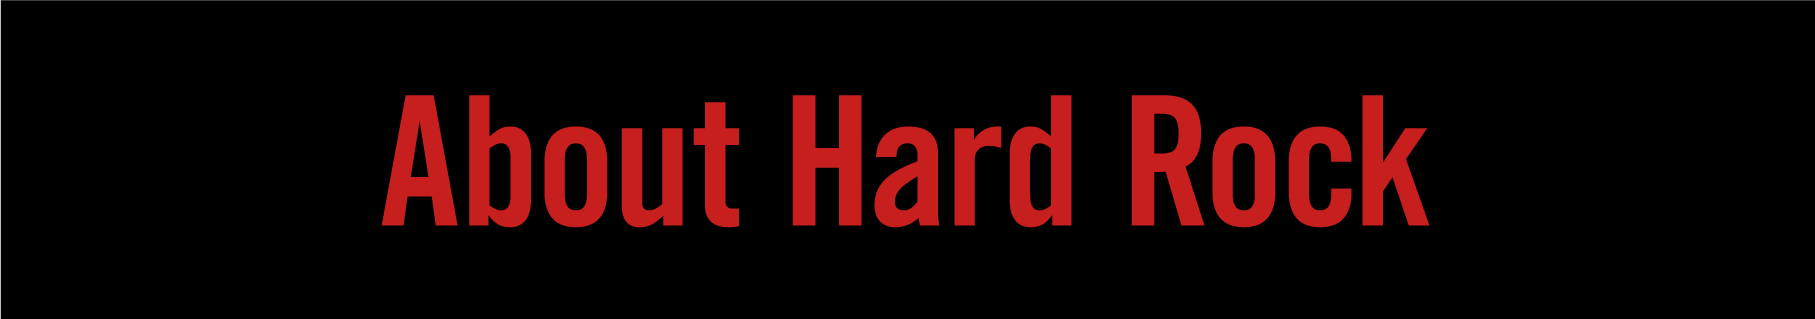 About HardRock